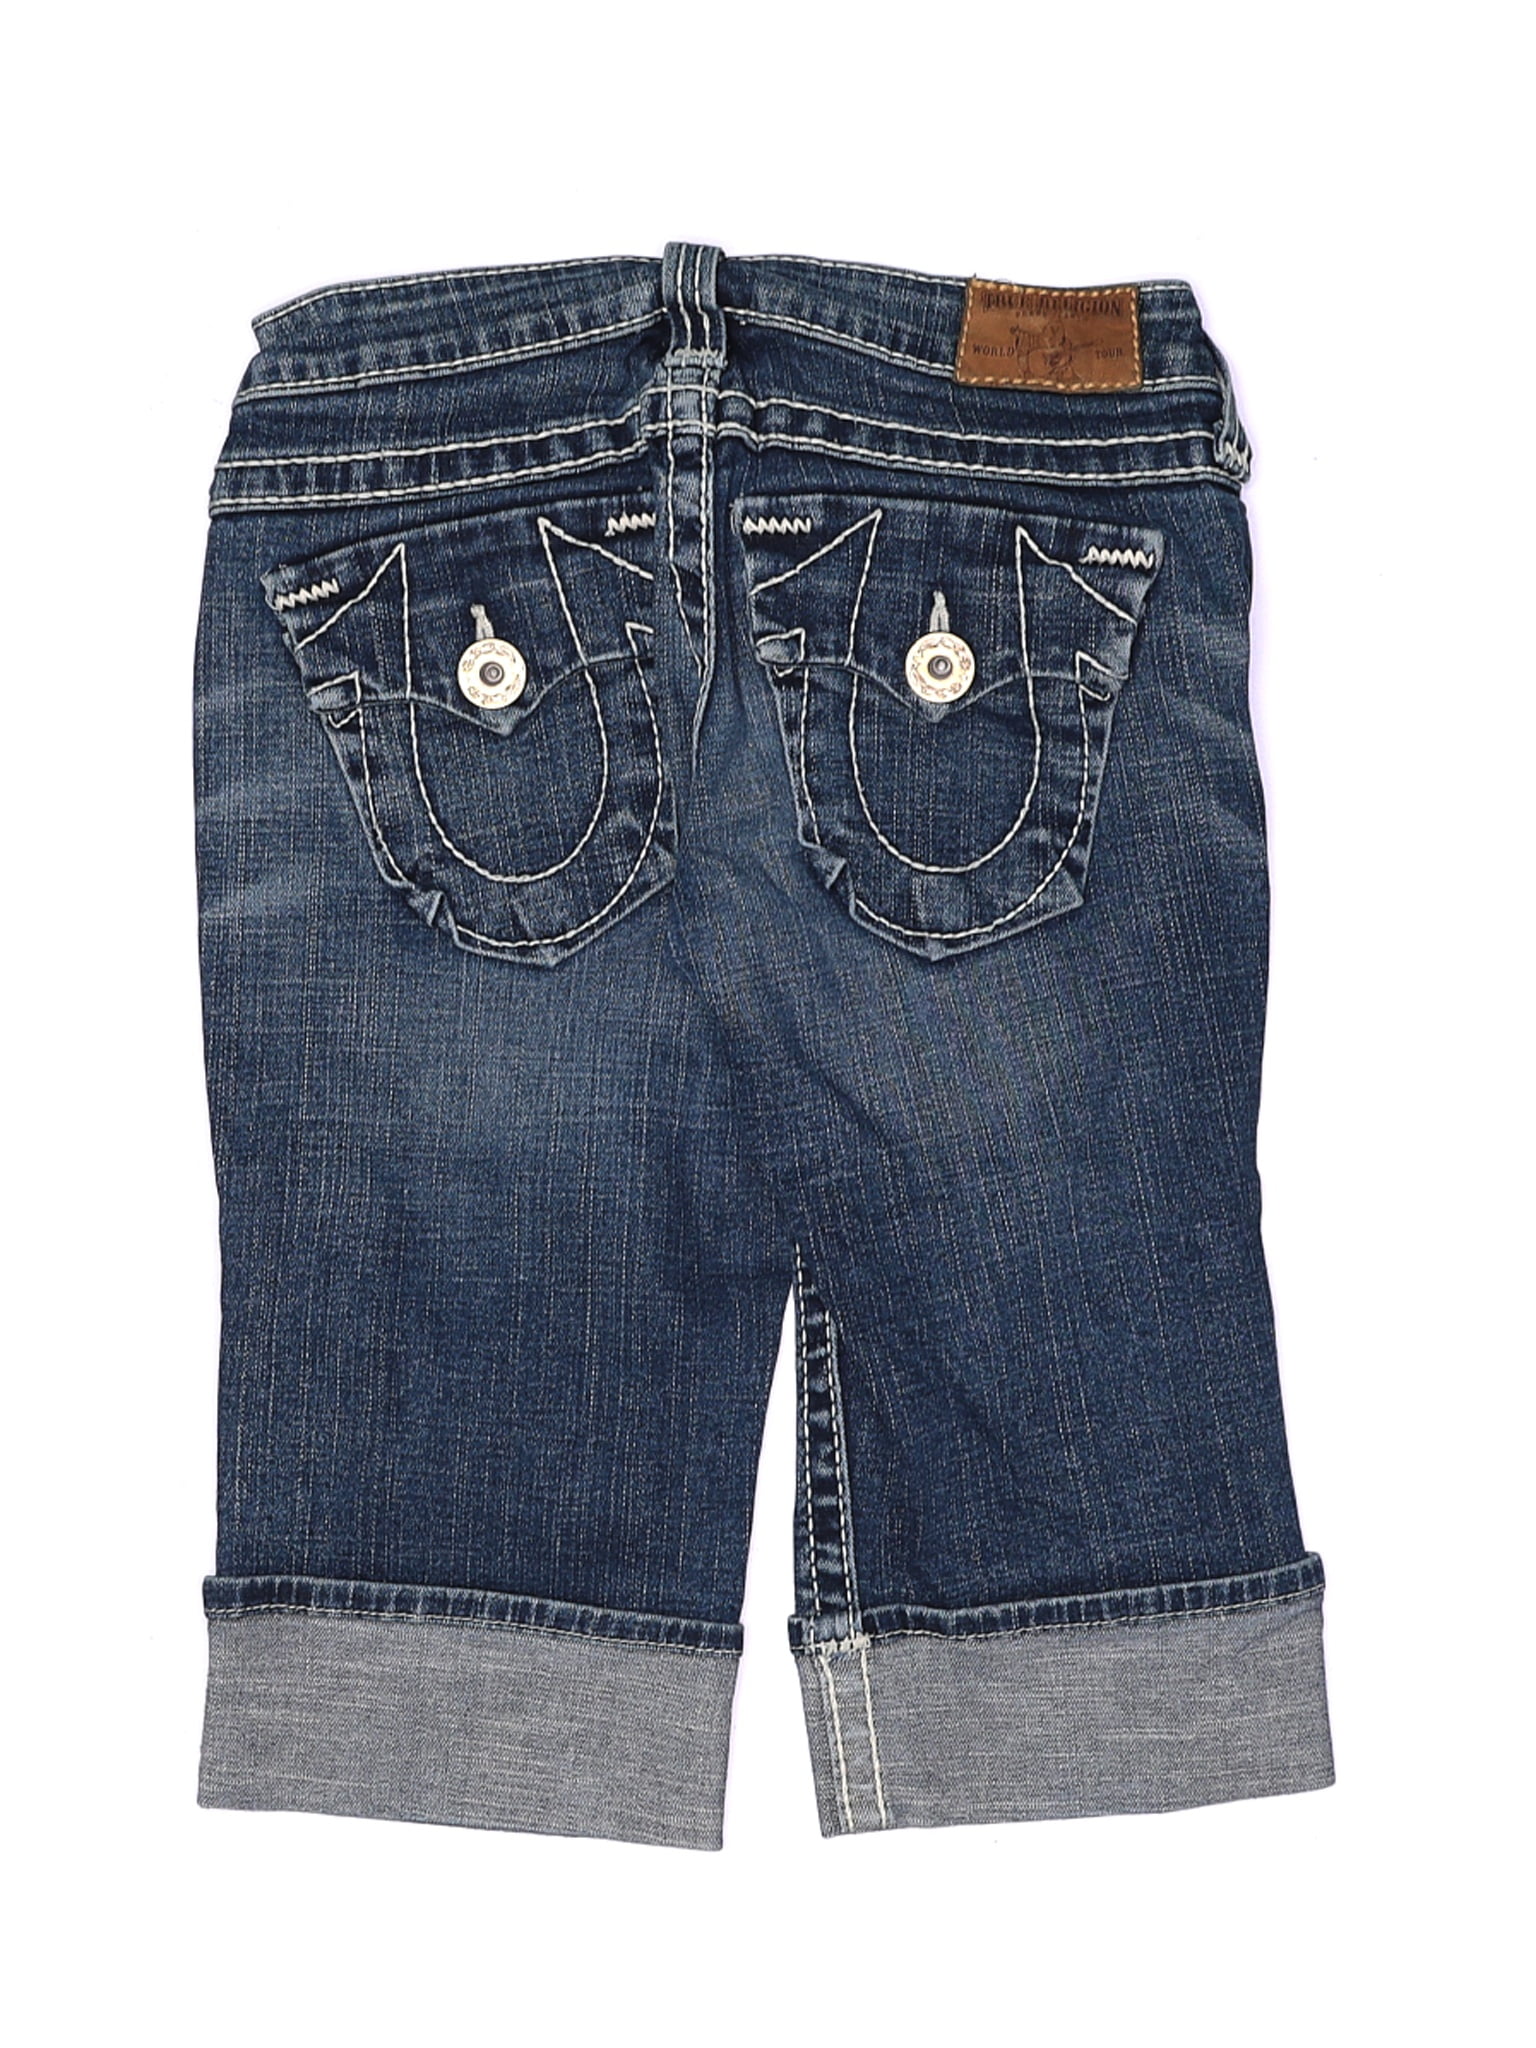 true religion jeans shorts